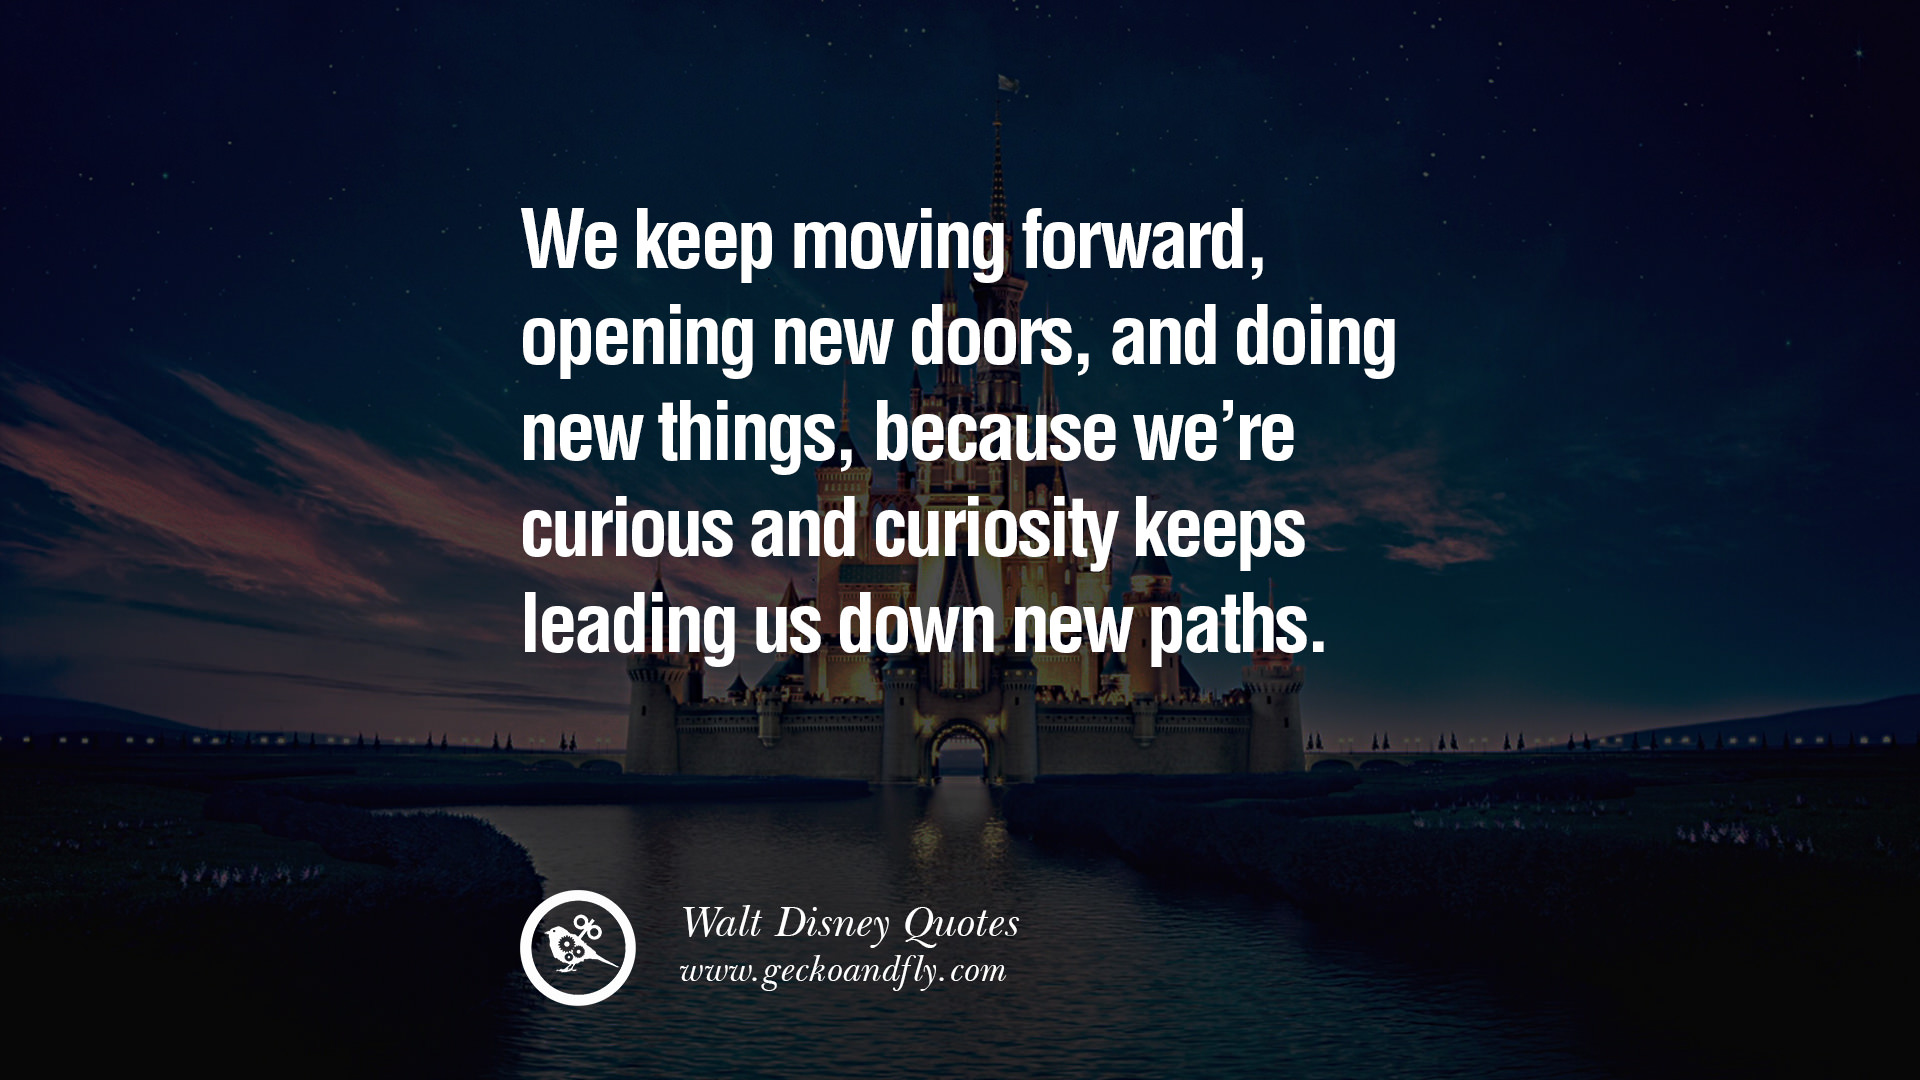 walt disney quote keep moving forward